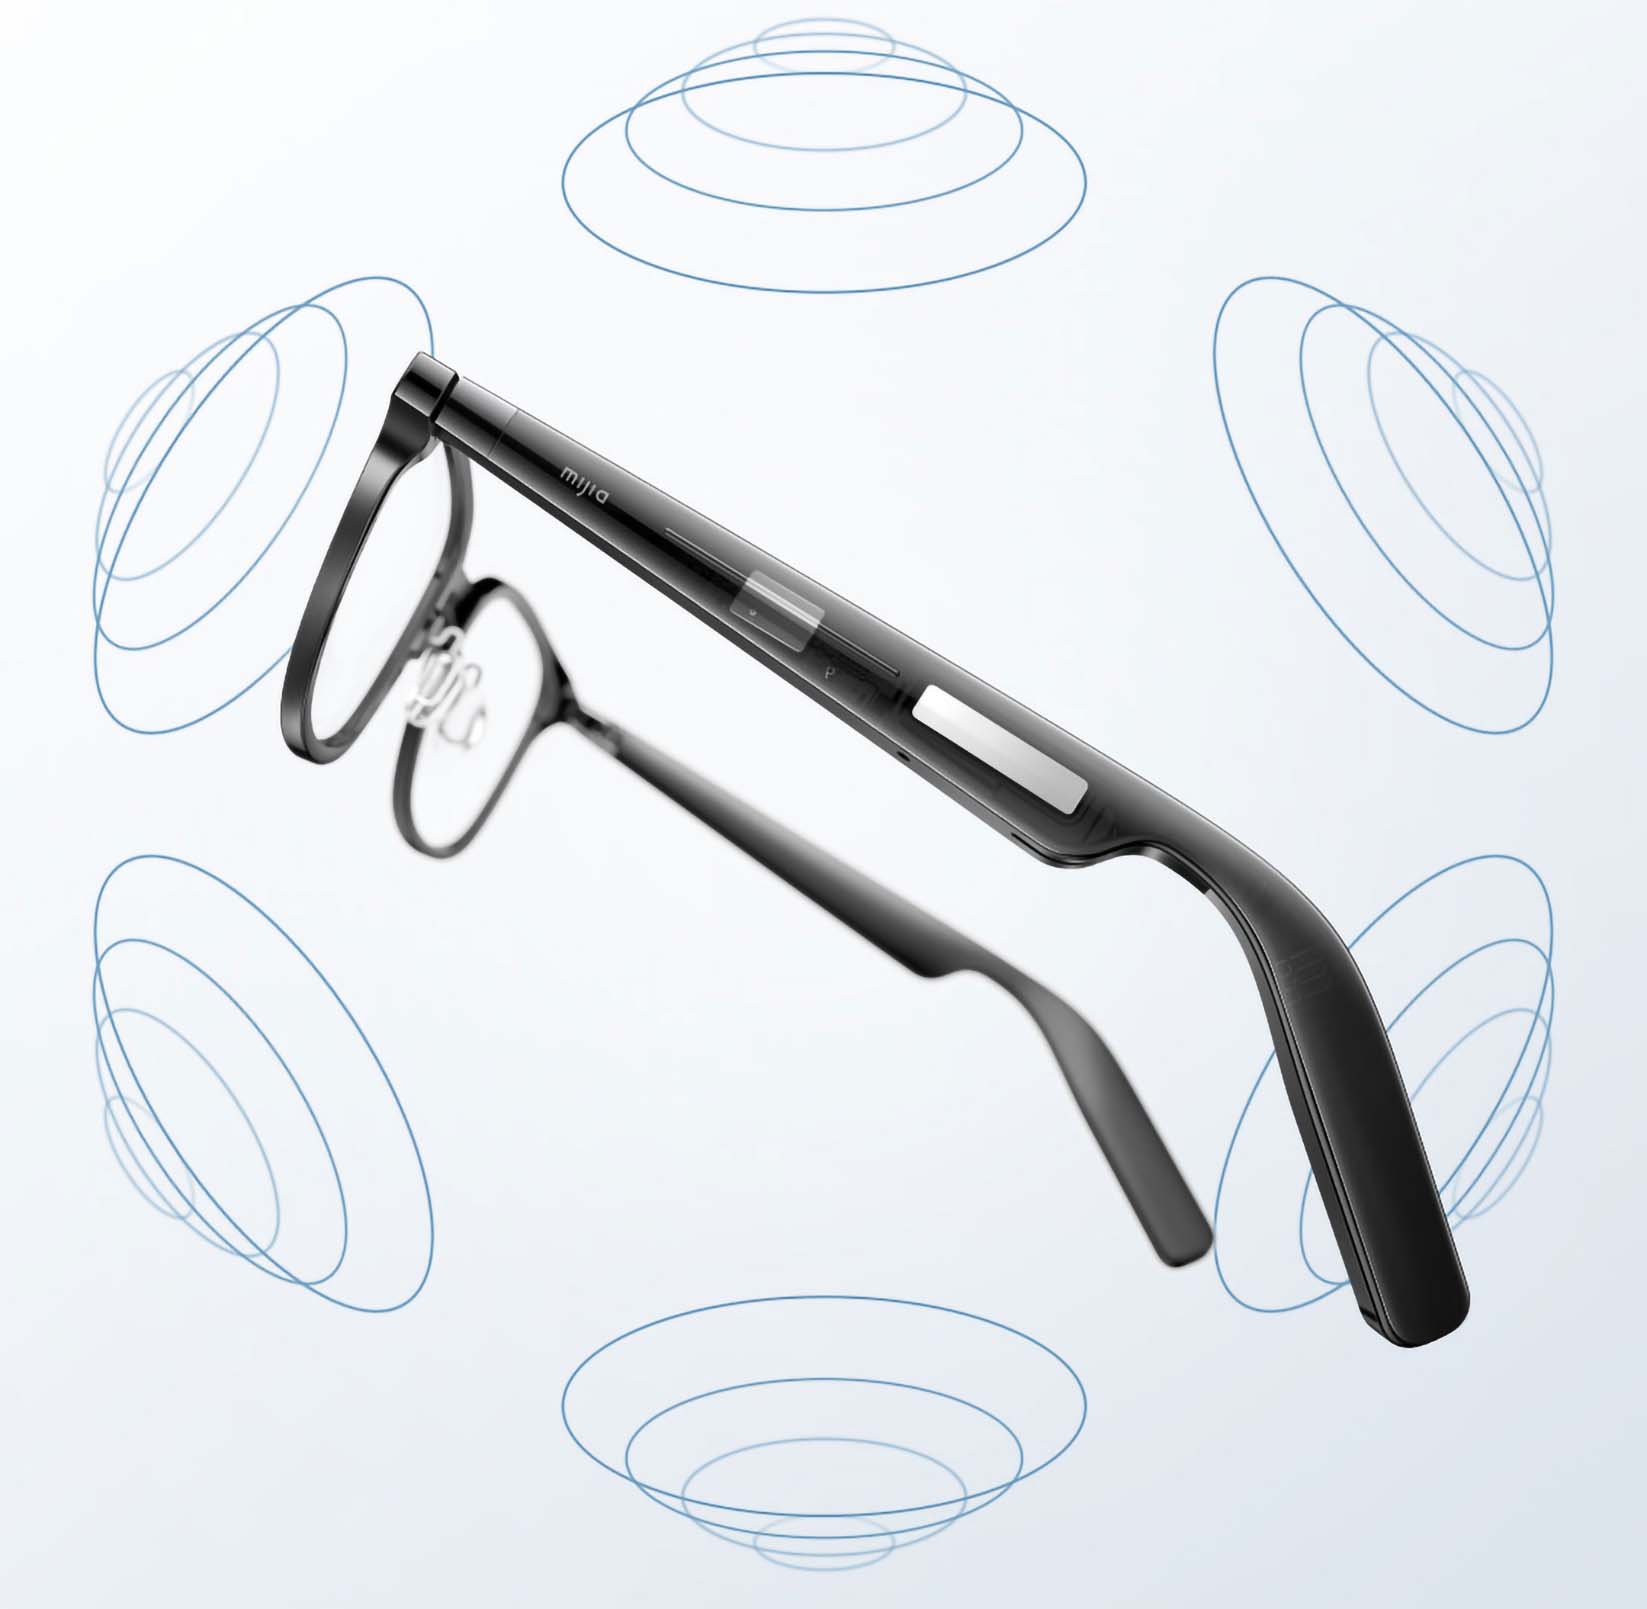 Mijia Smart Audio Glasses